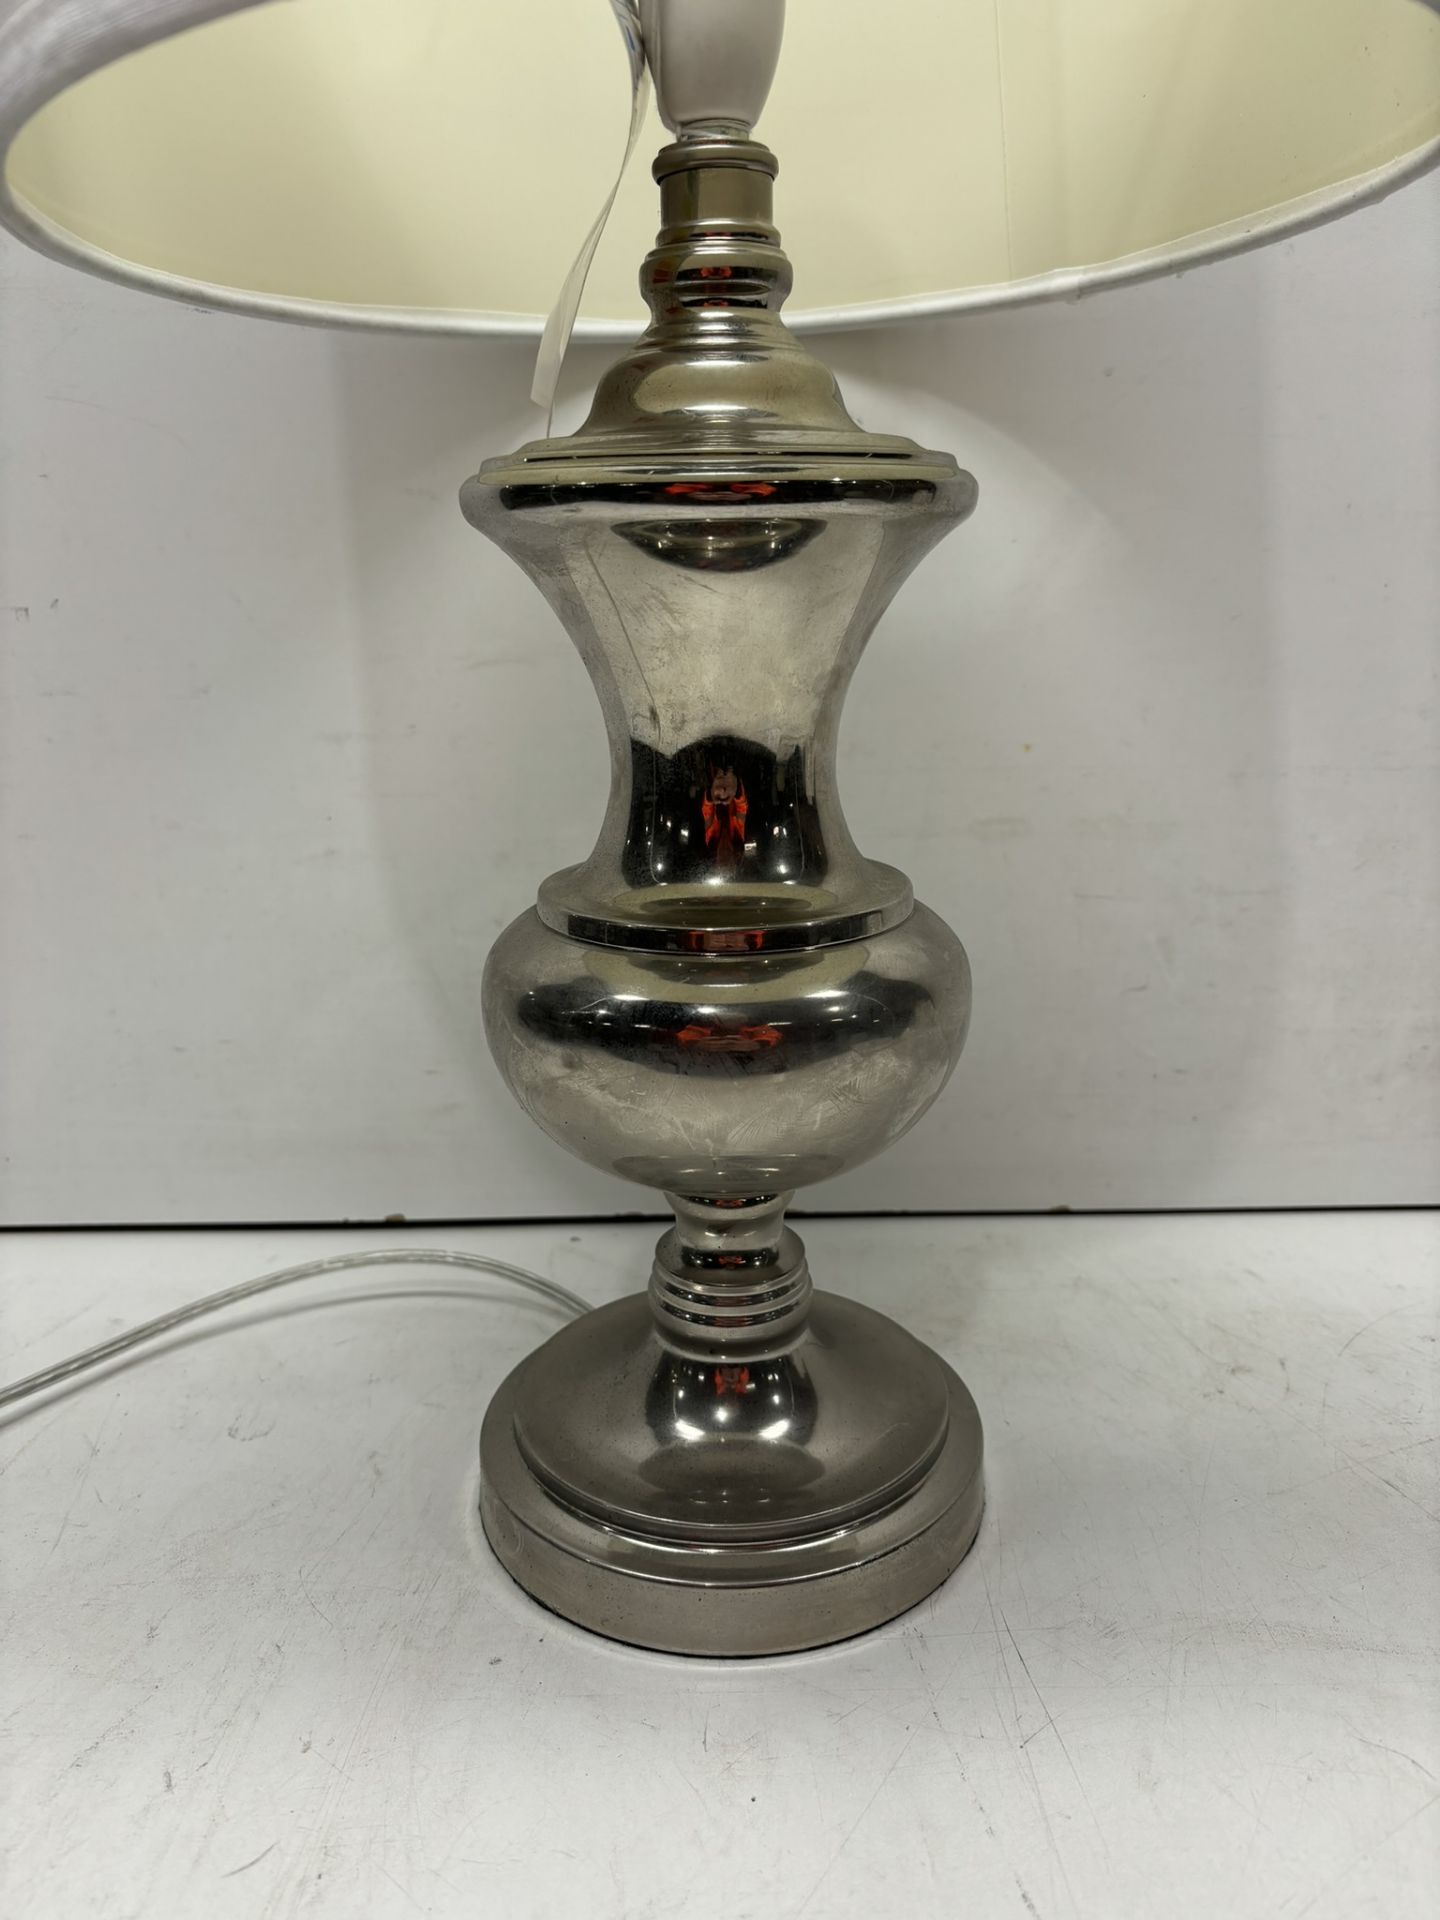 Ex-Display Silver Metal Table Lamp - Image 2 of 5